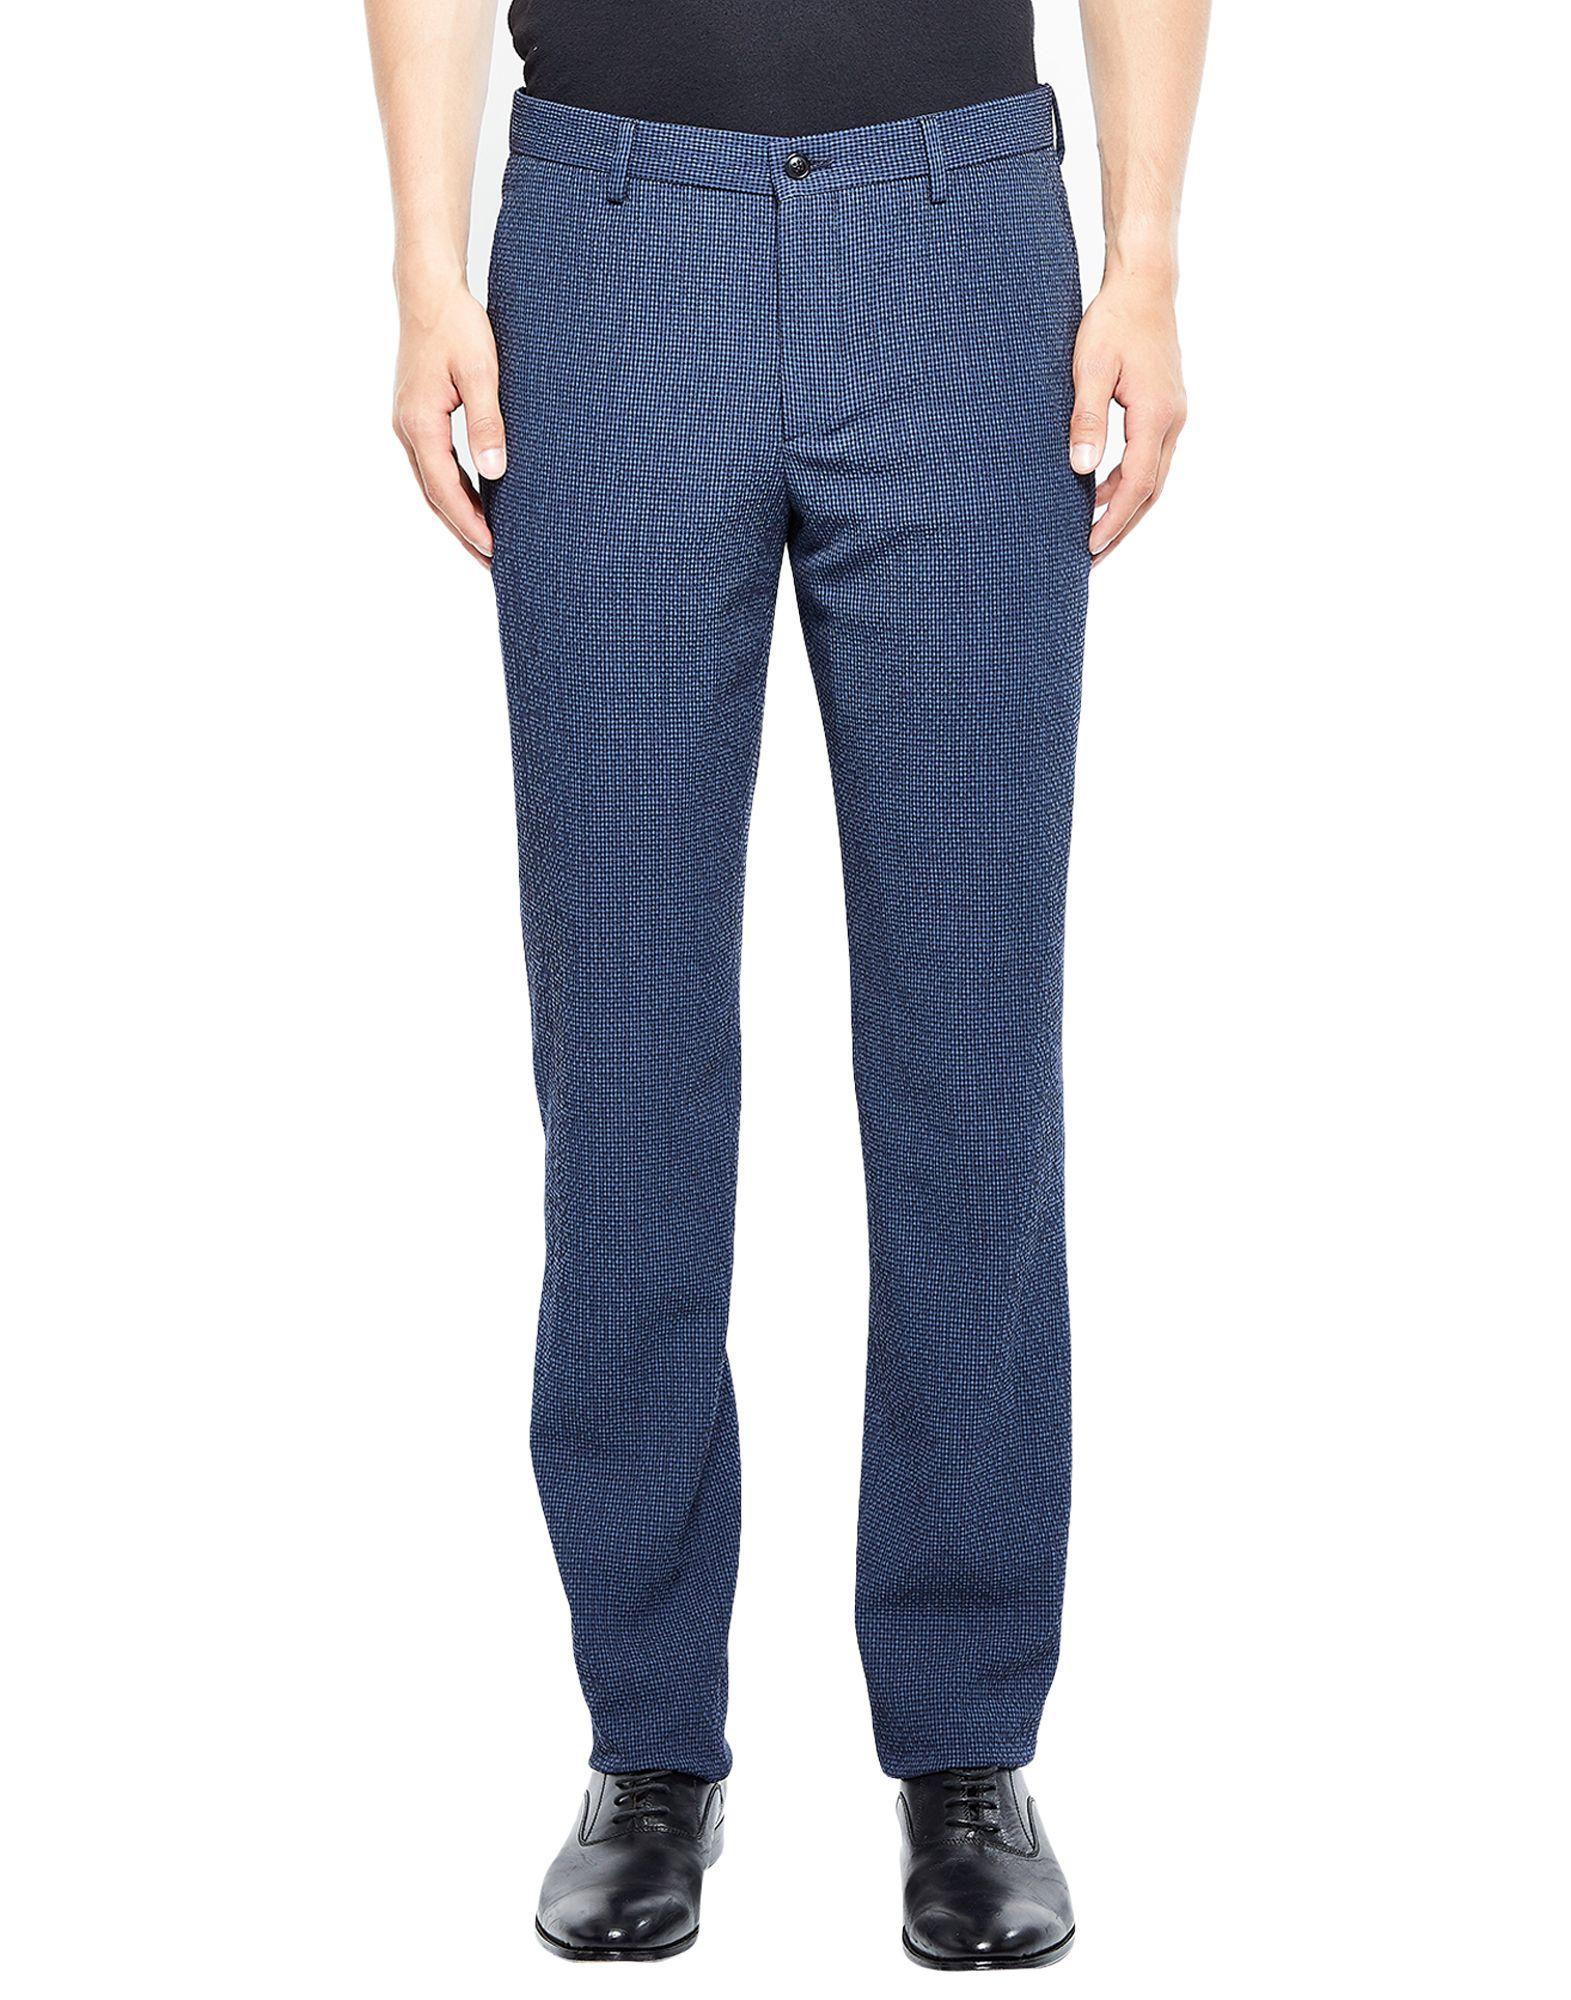 Giorgio Armani Wool Casual Pants in Dark Blue (Blue) for Men - Lyst